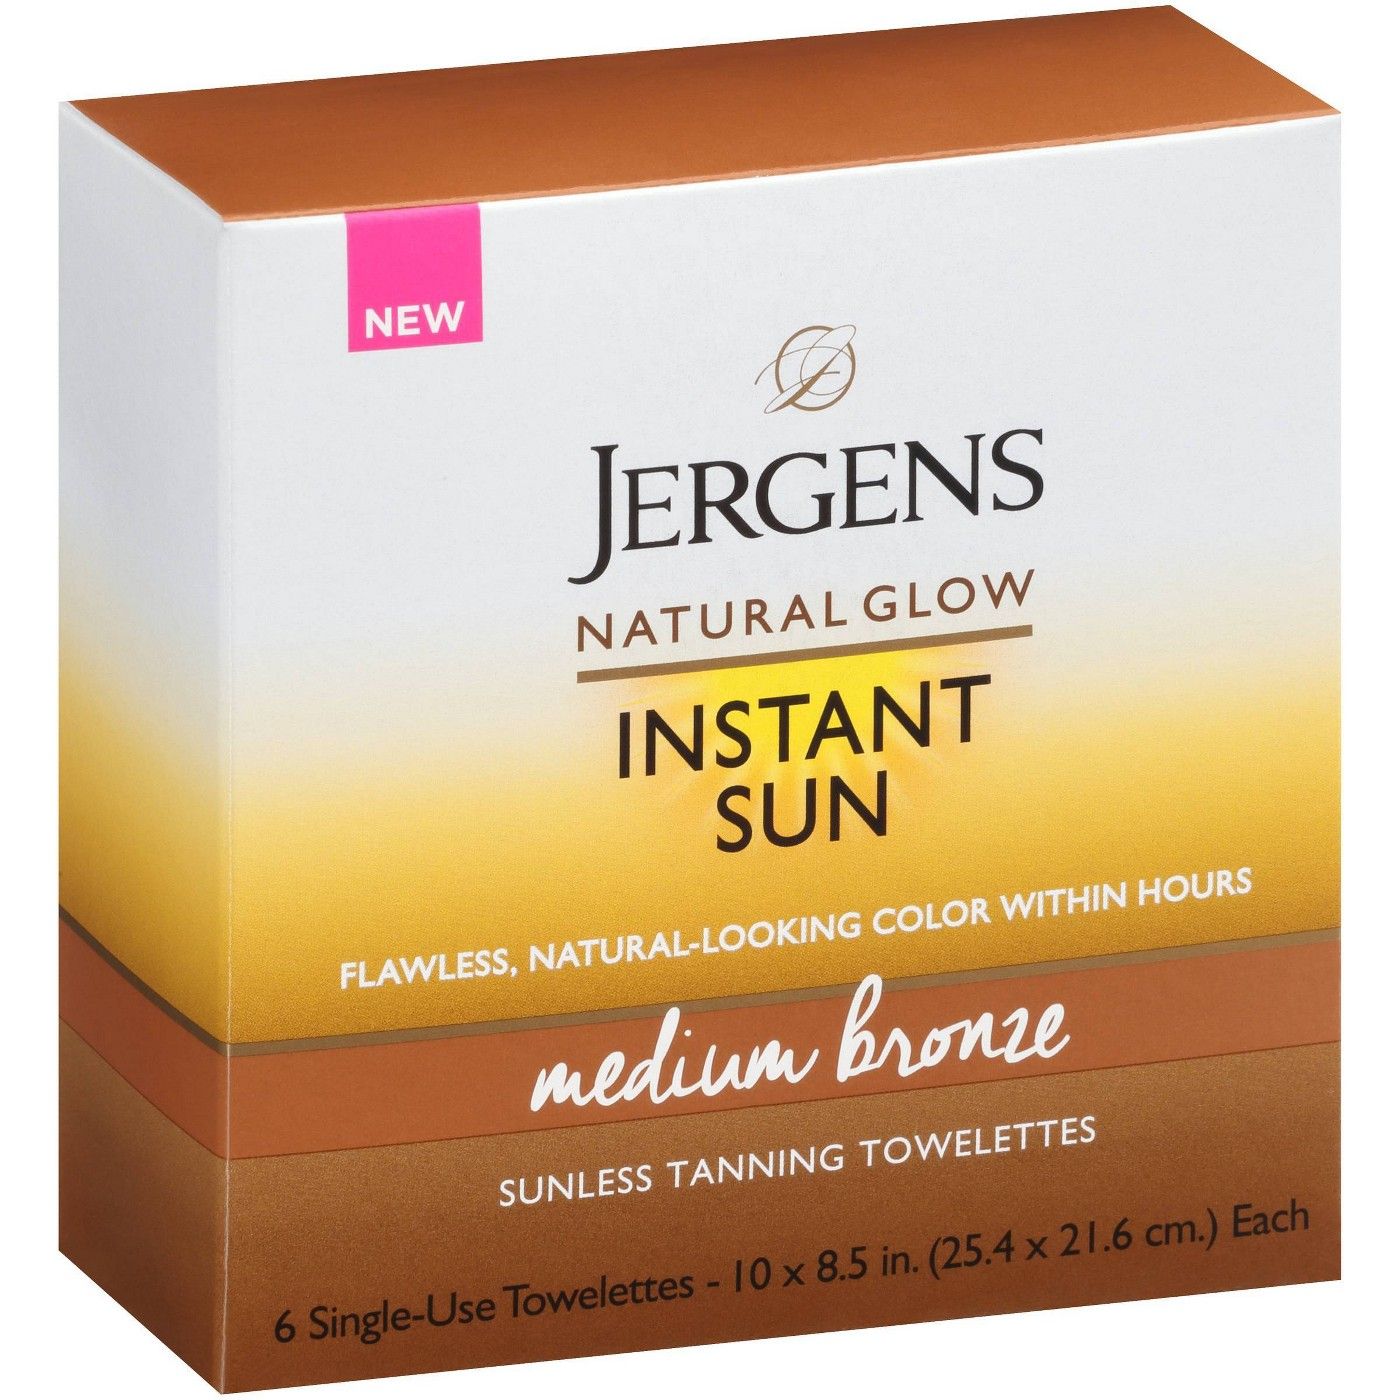 Jergens Natural Glow Instant Sun Reviews | (Unbiased) - Beautylectual